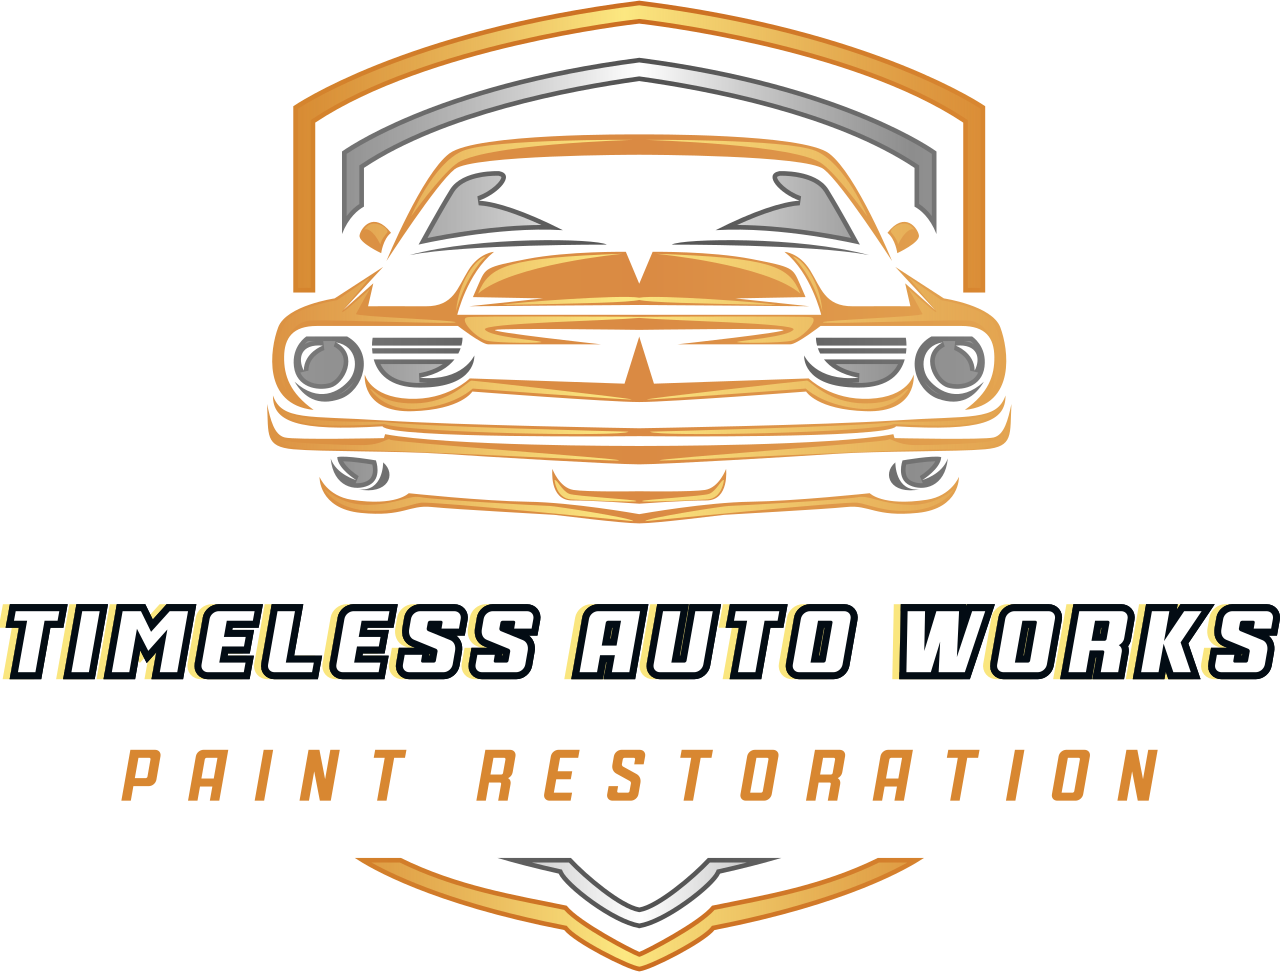 Timeless Auto Works's logo